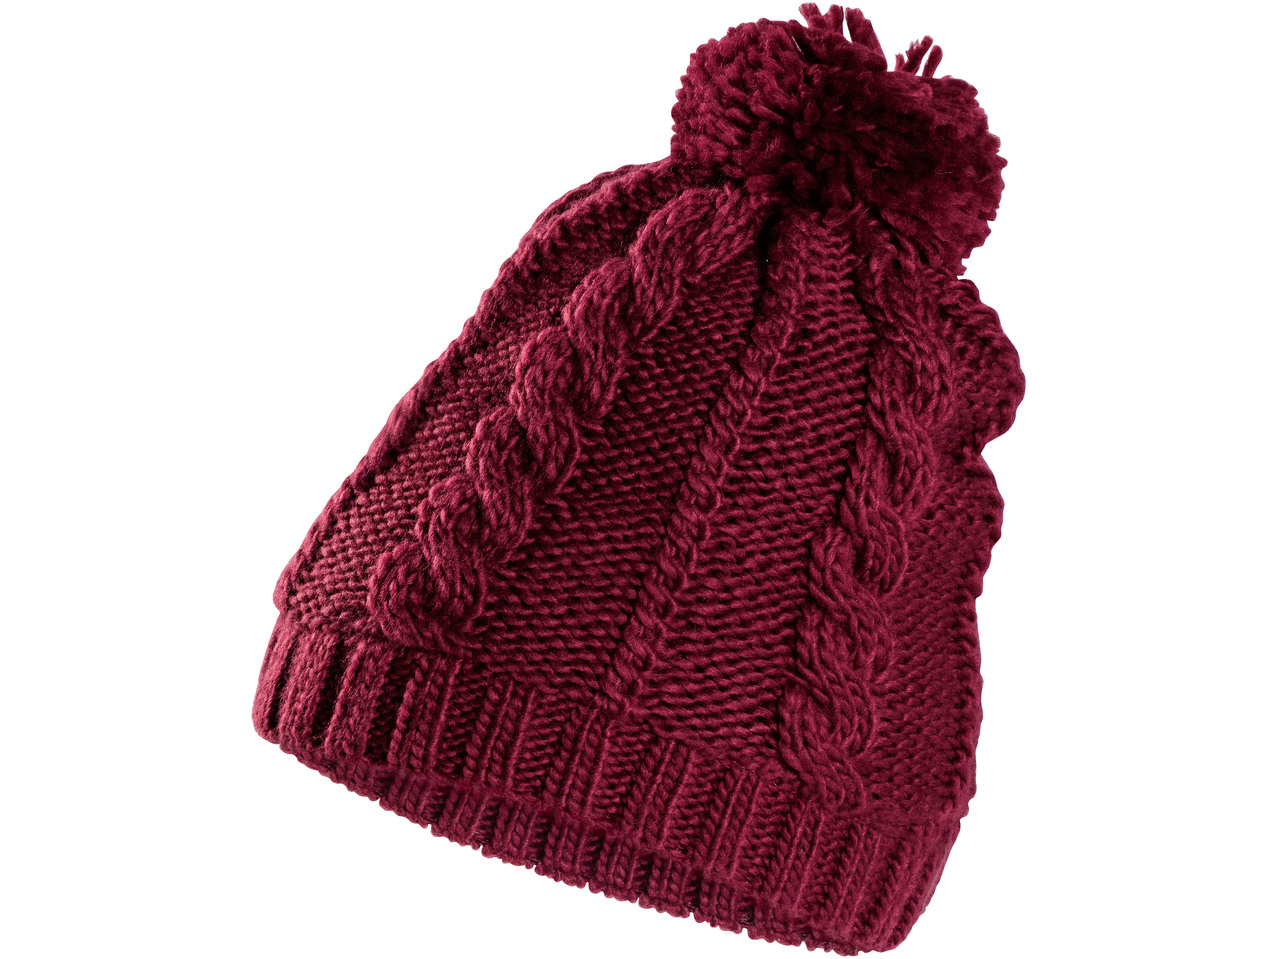 CRIVIT Ladies'/Men's Knitted Hat